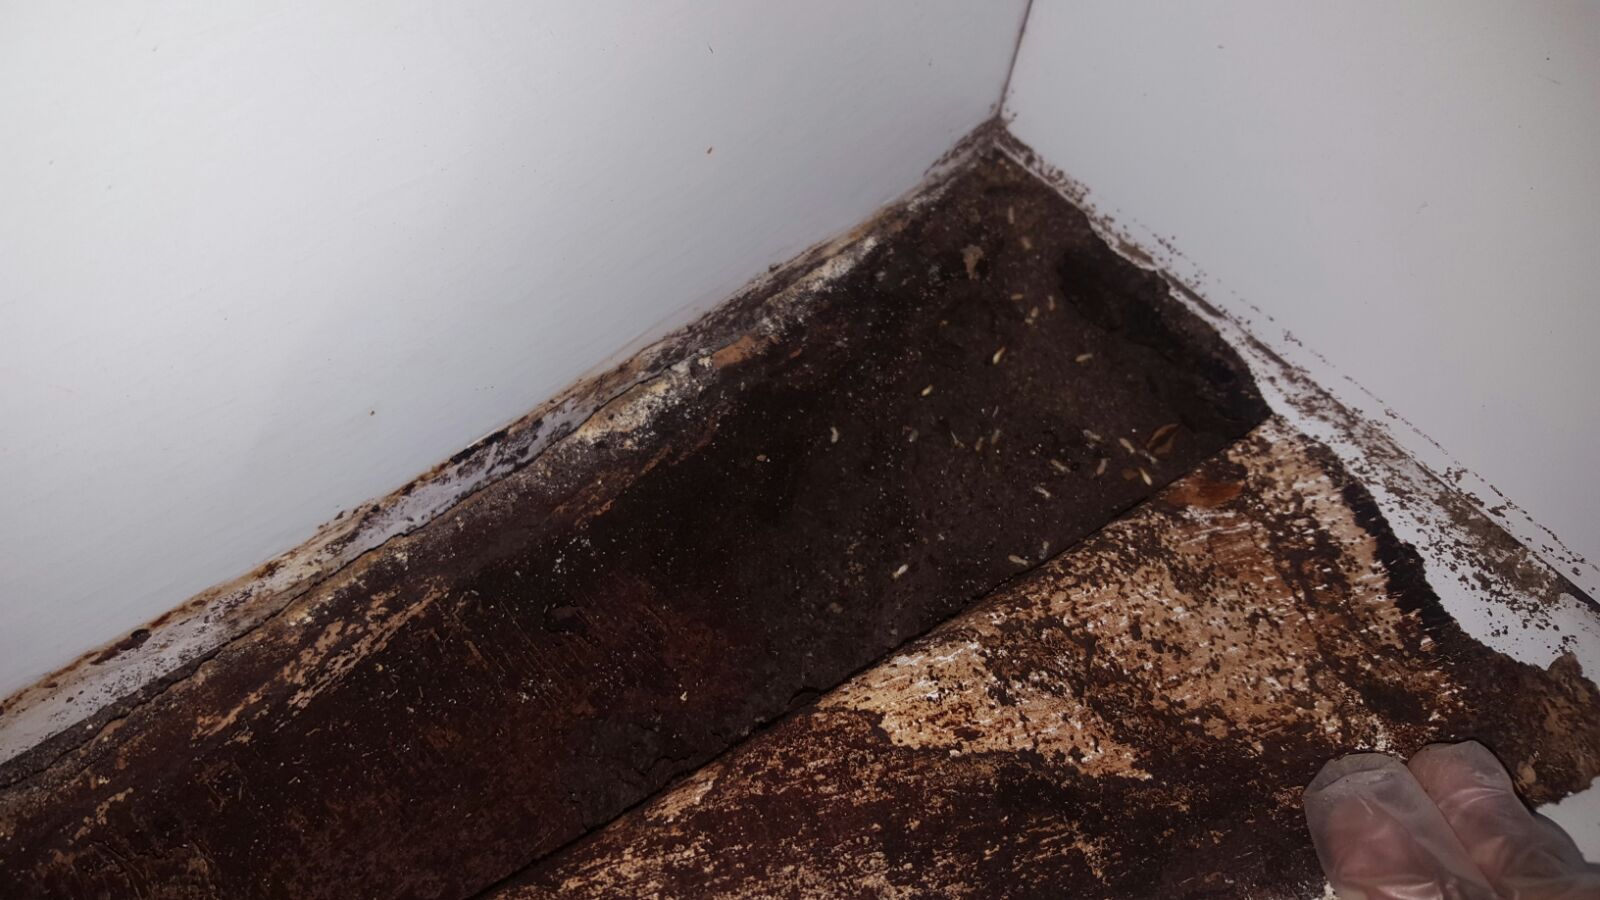 Subterranean Termite Services 